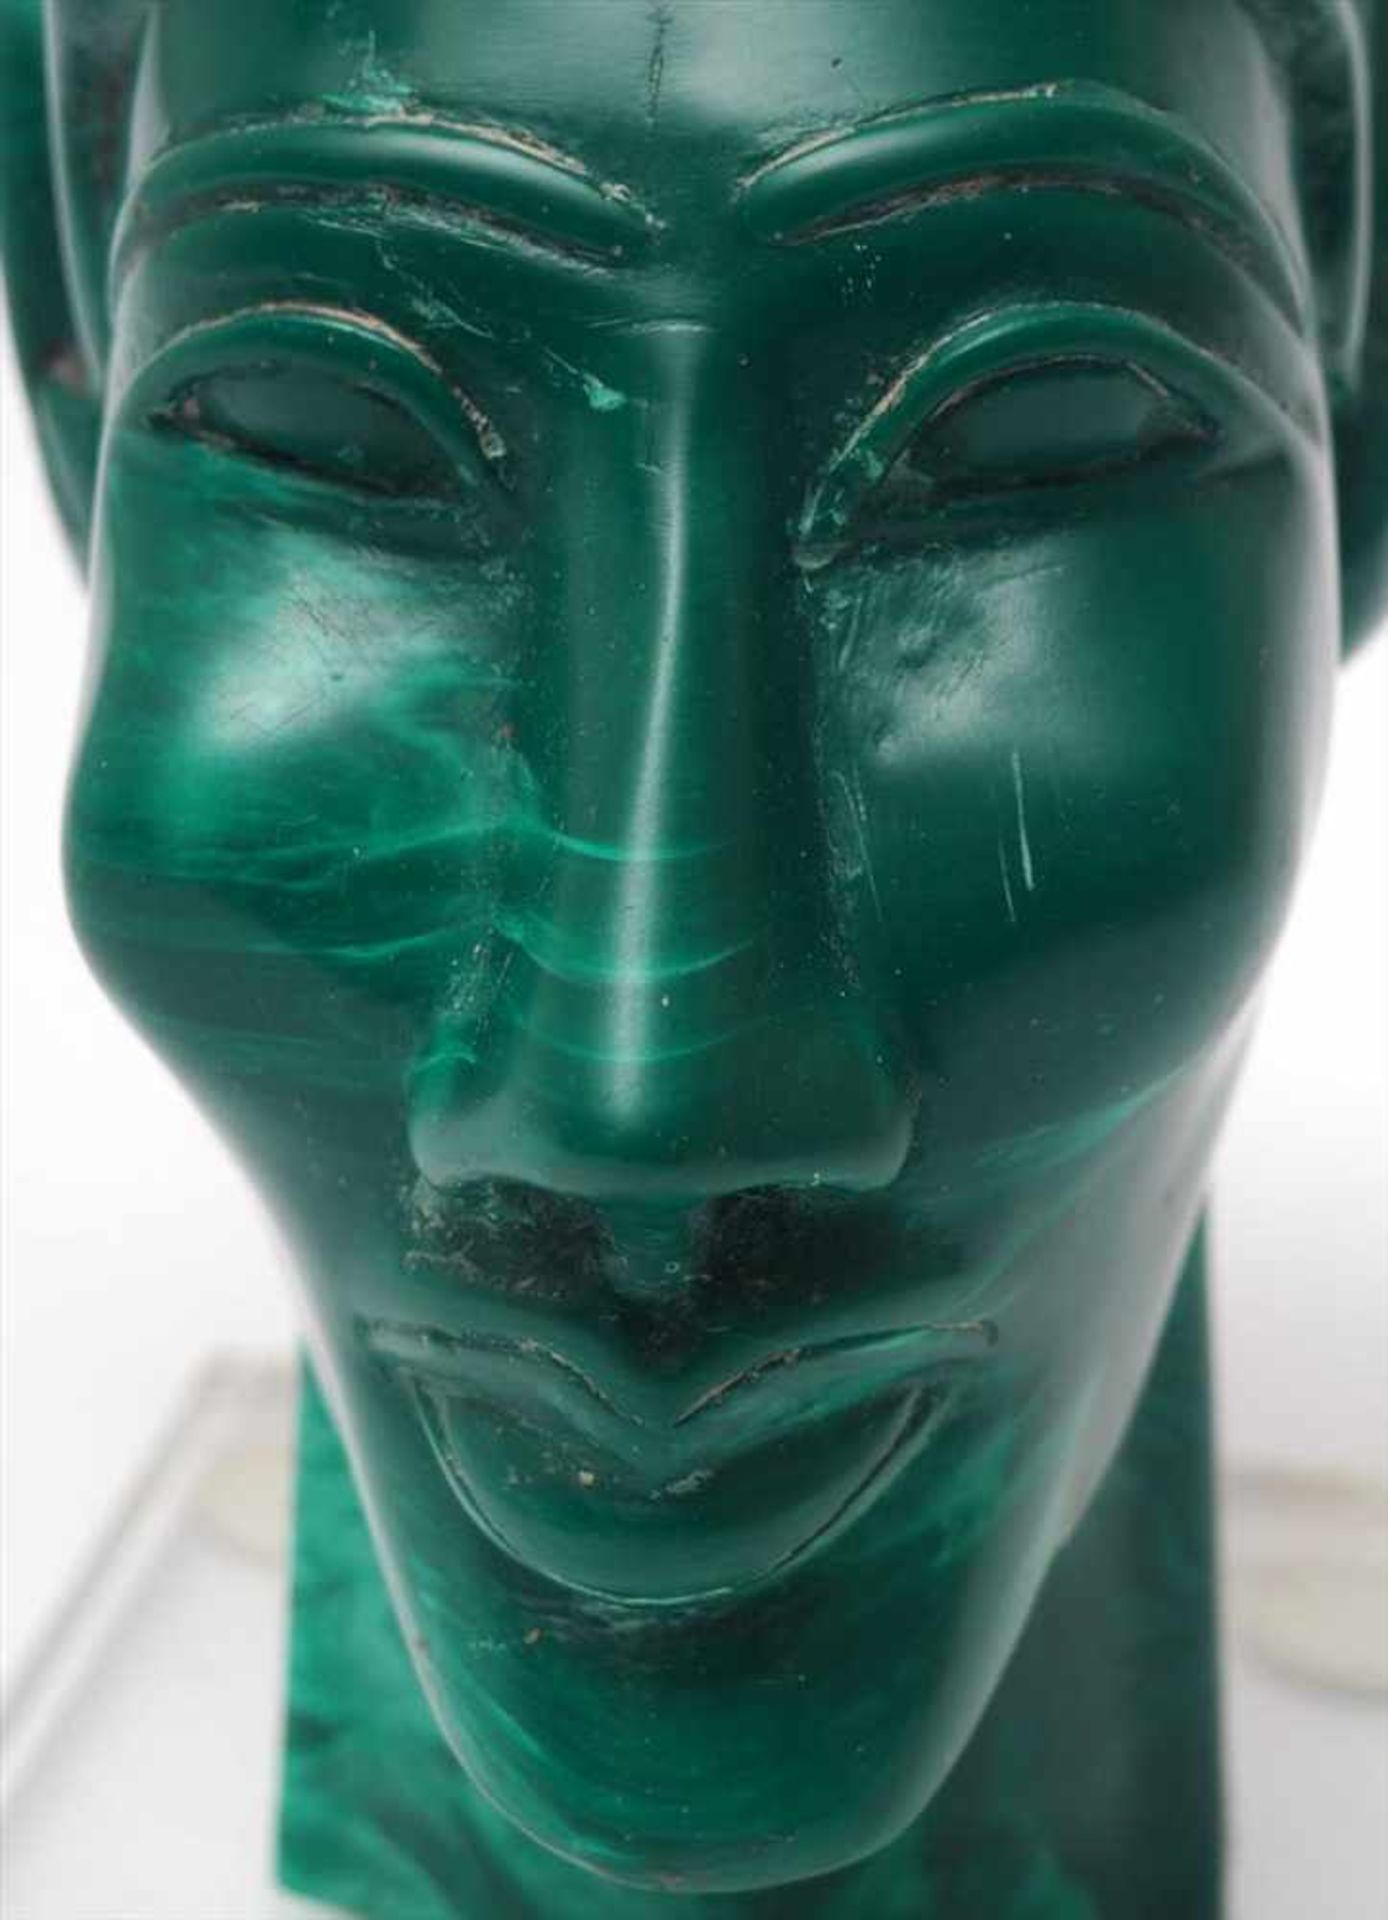 MuseumsreplikPortraitkopf des Pharaos Echnaton. Auf Acrylglassockel. H.24cm. - Image 3 of 3